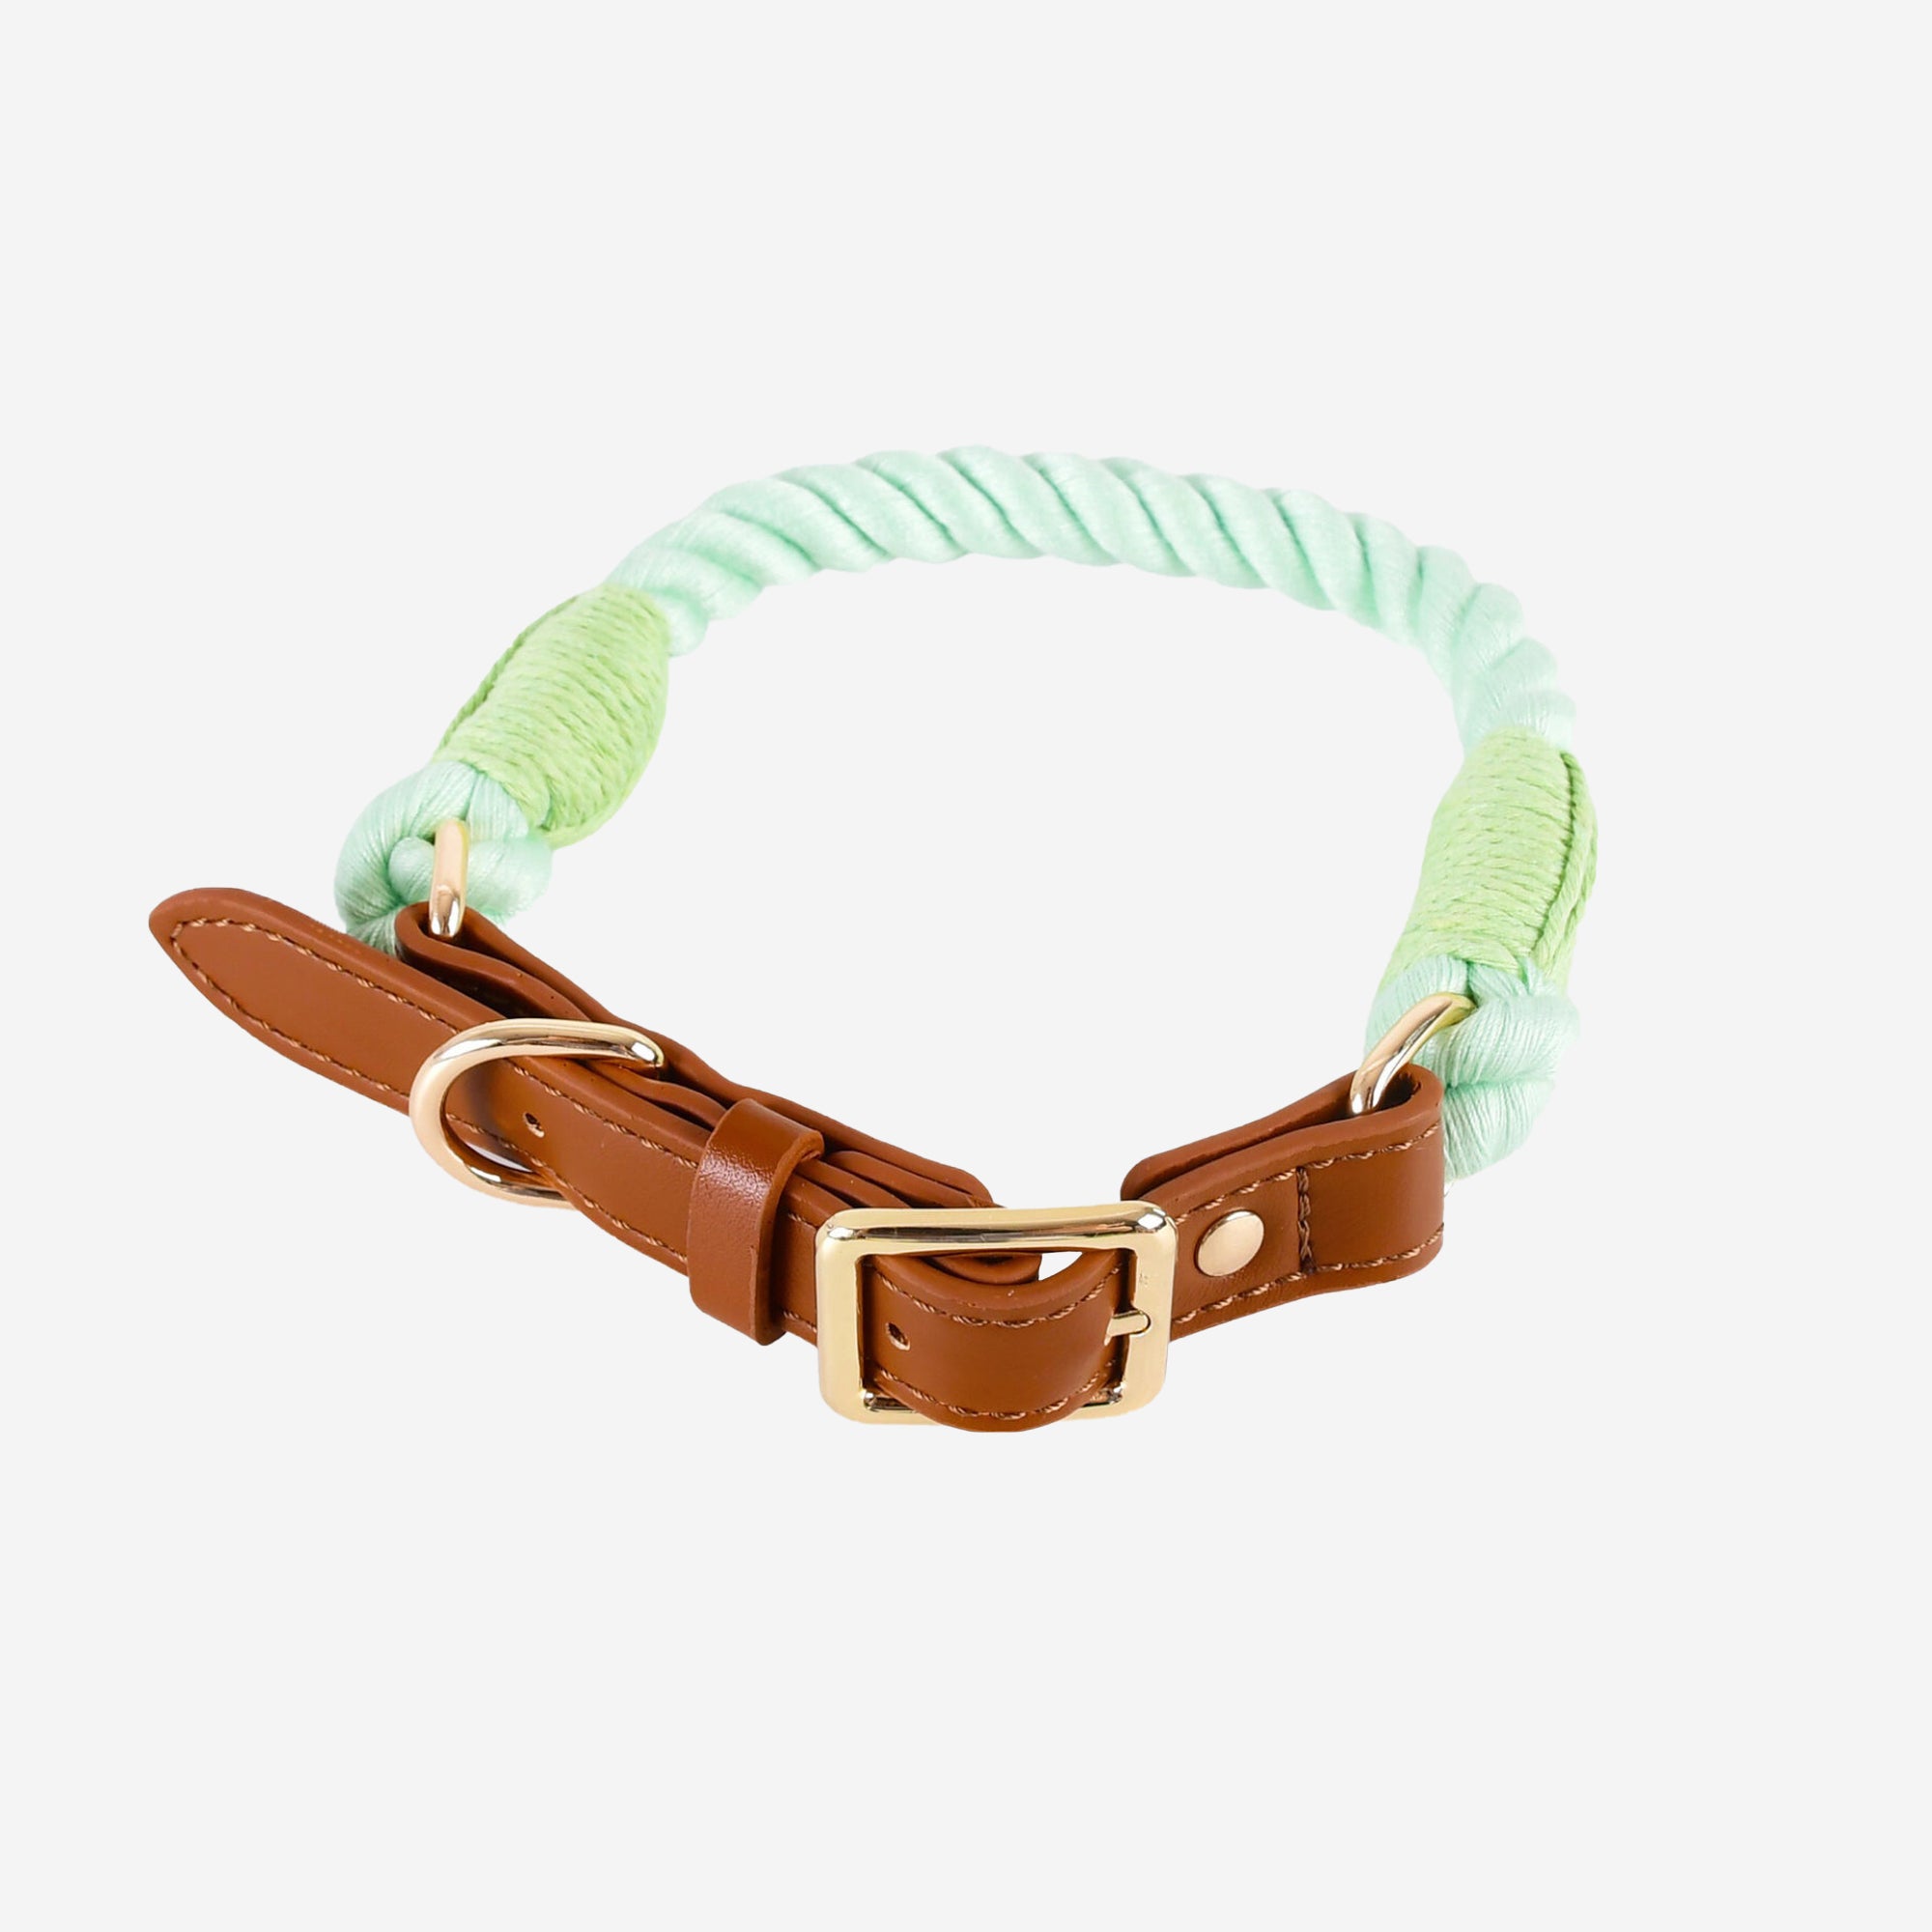 Pupwonders | Boston Leather & Braided Cotton Pet Collars